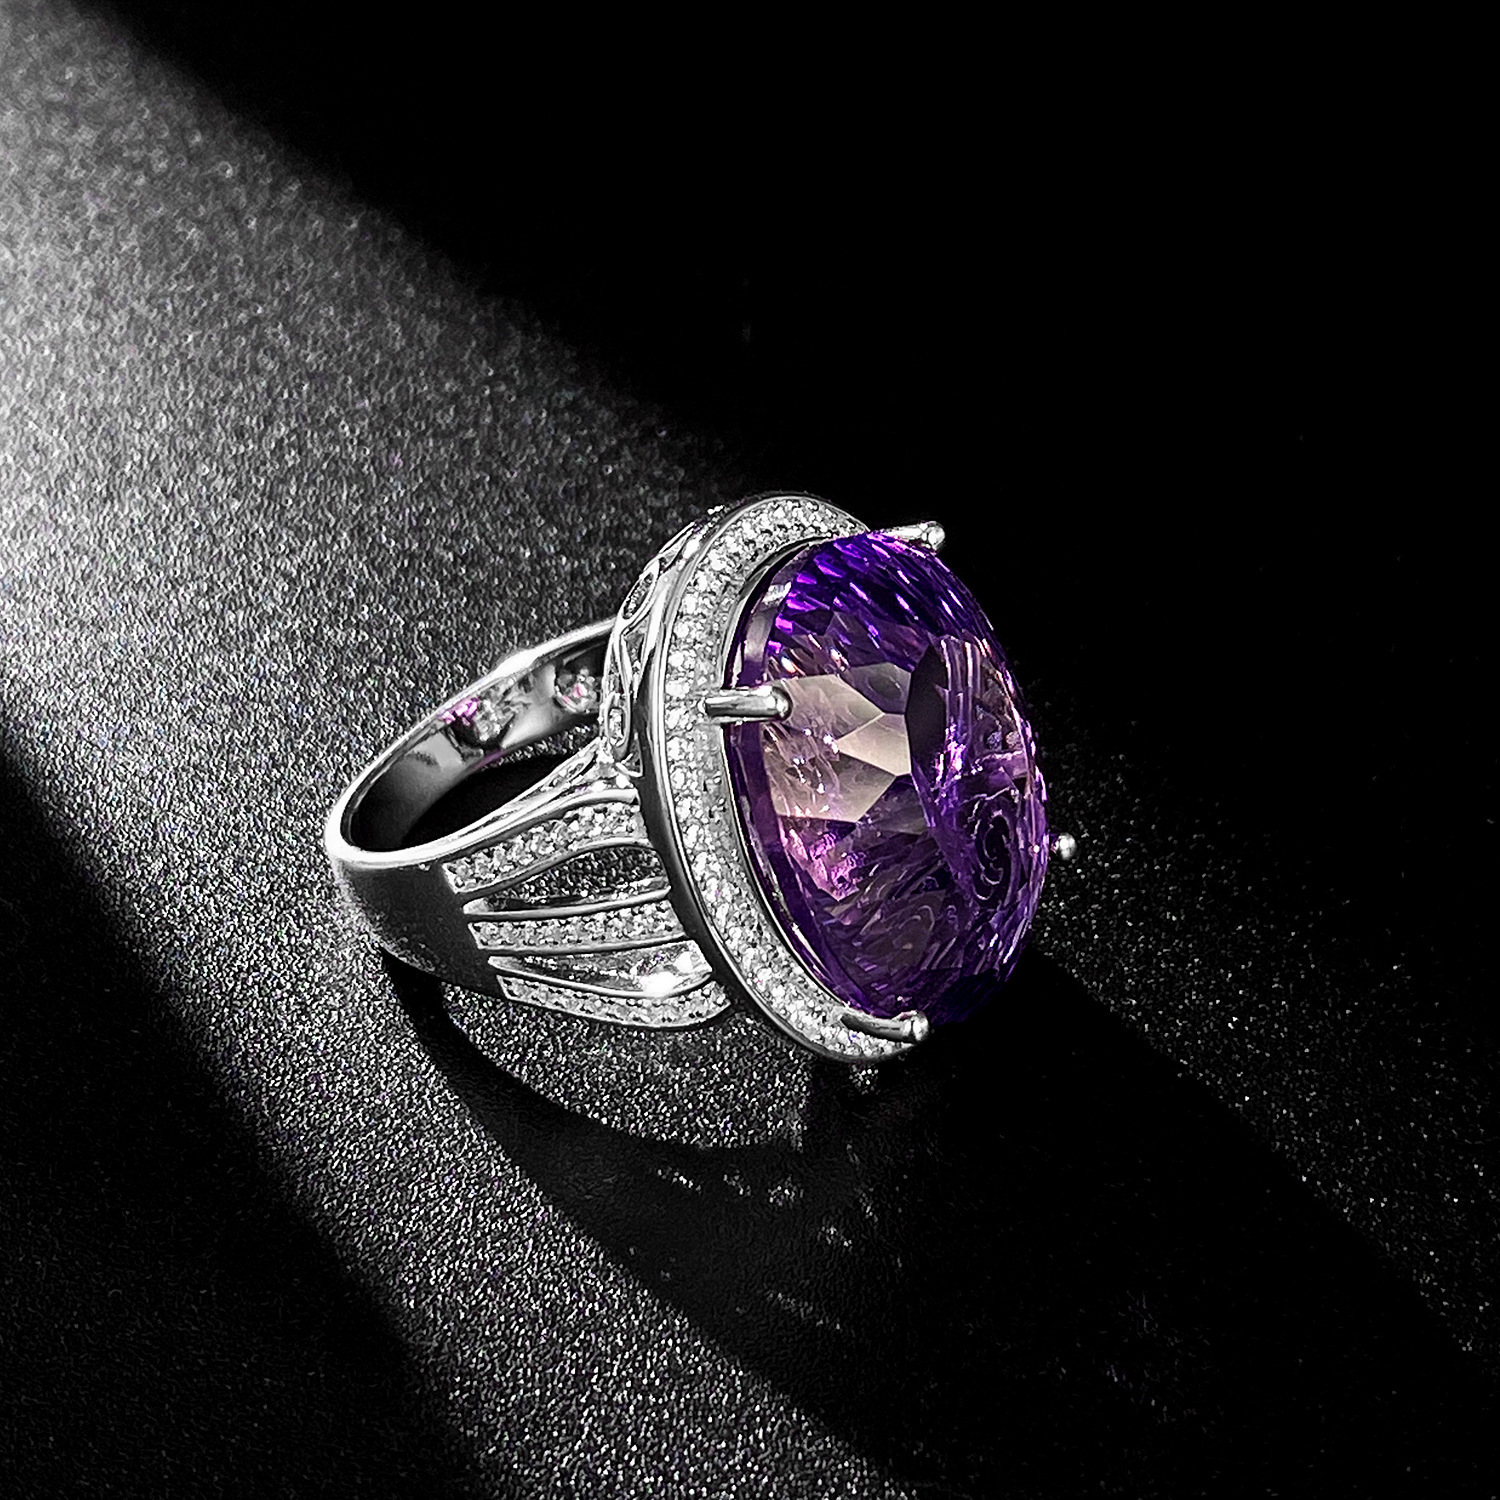 Light Purple Amethyst and Diamond Ring in 14k white gold (GR-2091)